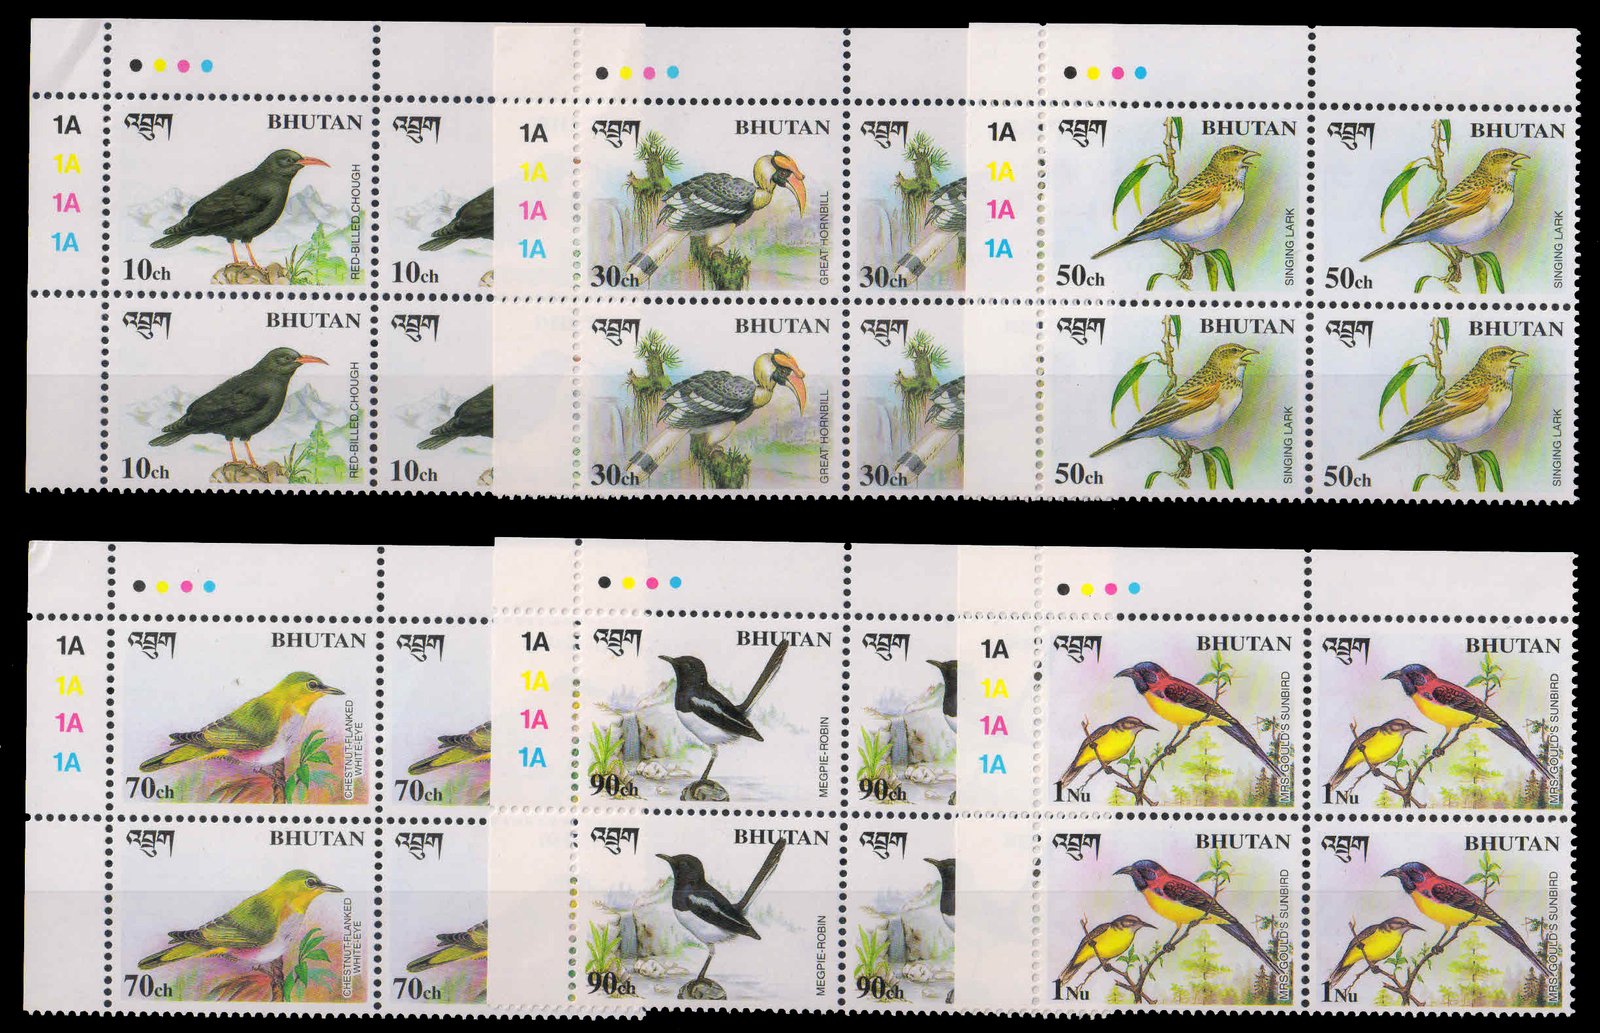 BHUTAN 1998-Birds, 6 Different Blocks with Traffic Light, 1st Position, MNH, S.G. 1272-1277, Cat £ 5-